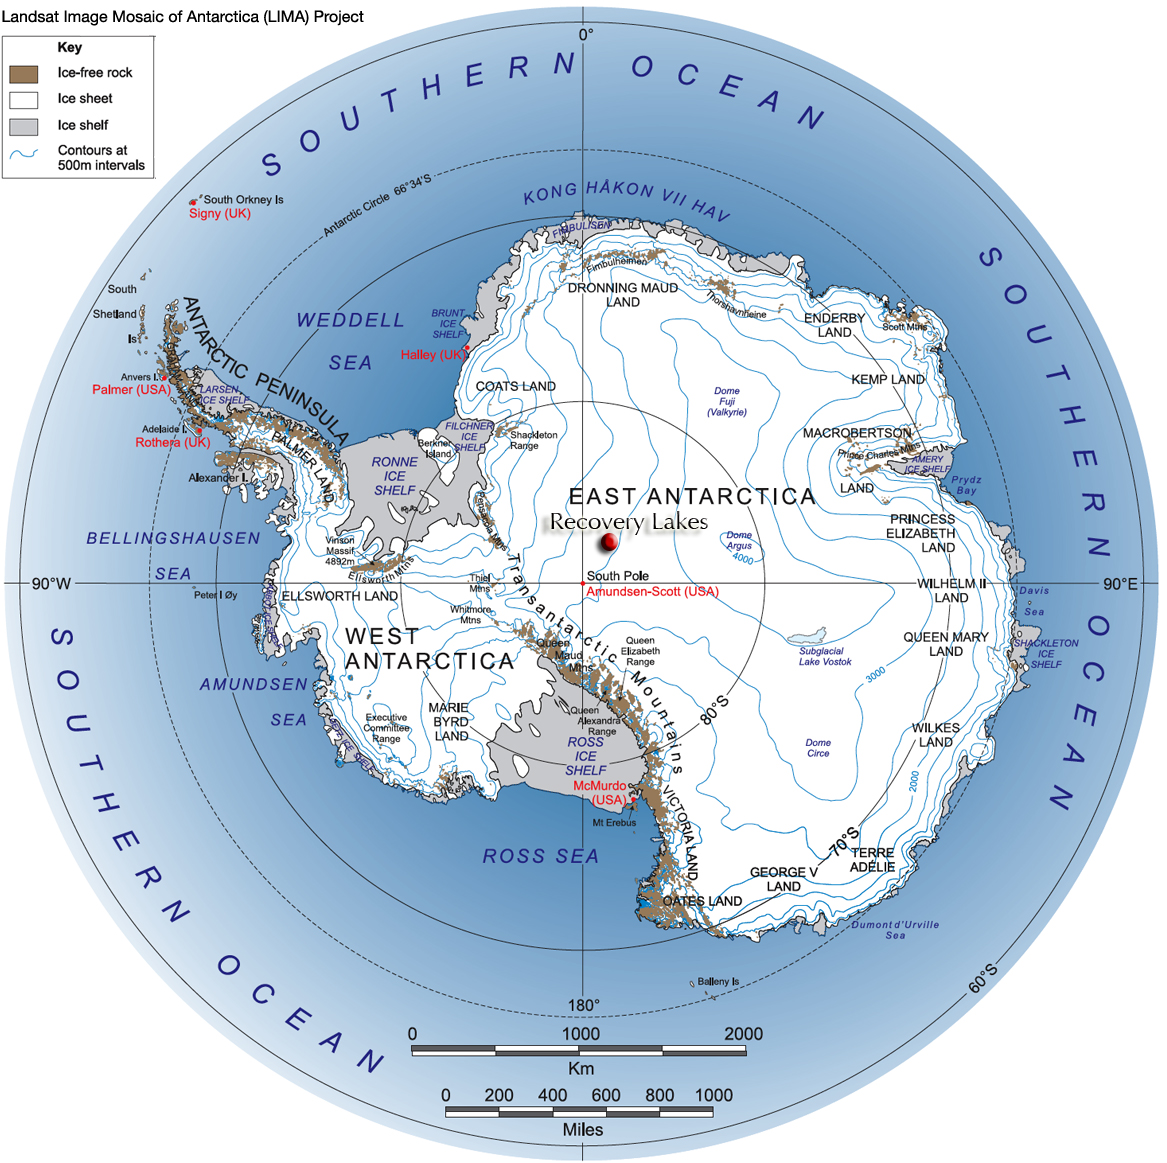 antarctica_recovery_lakes.jpg